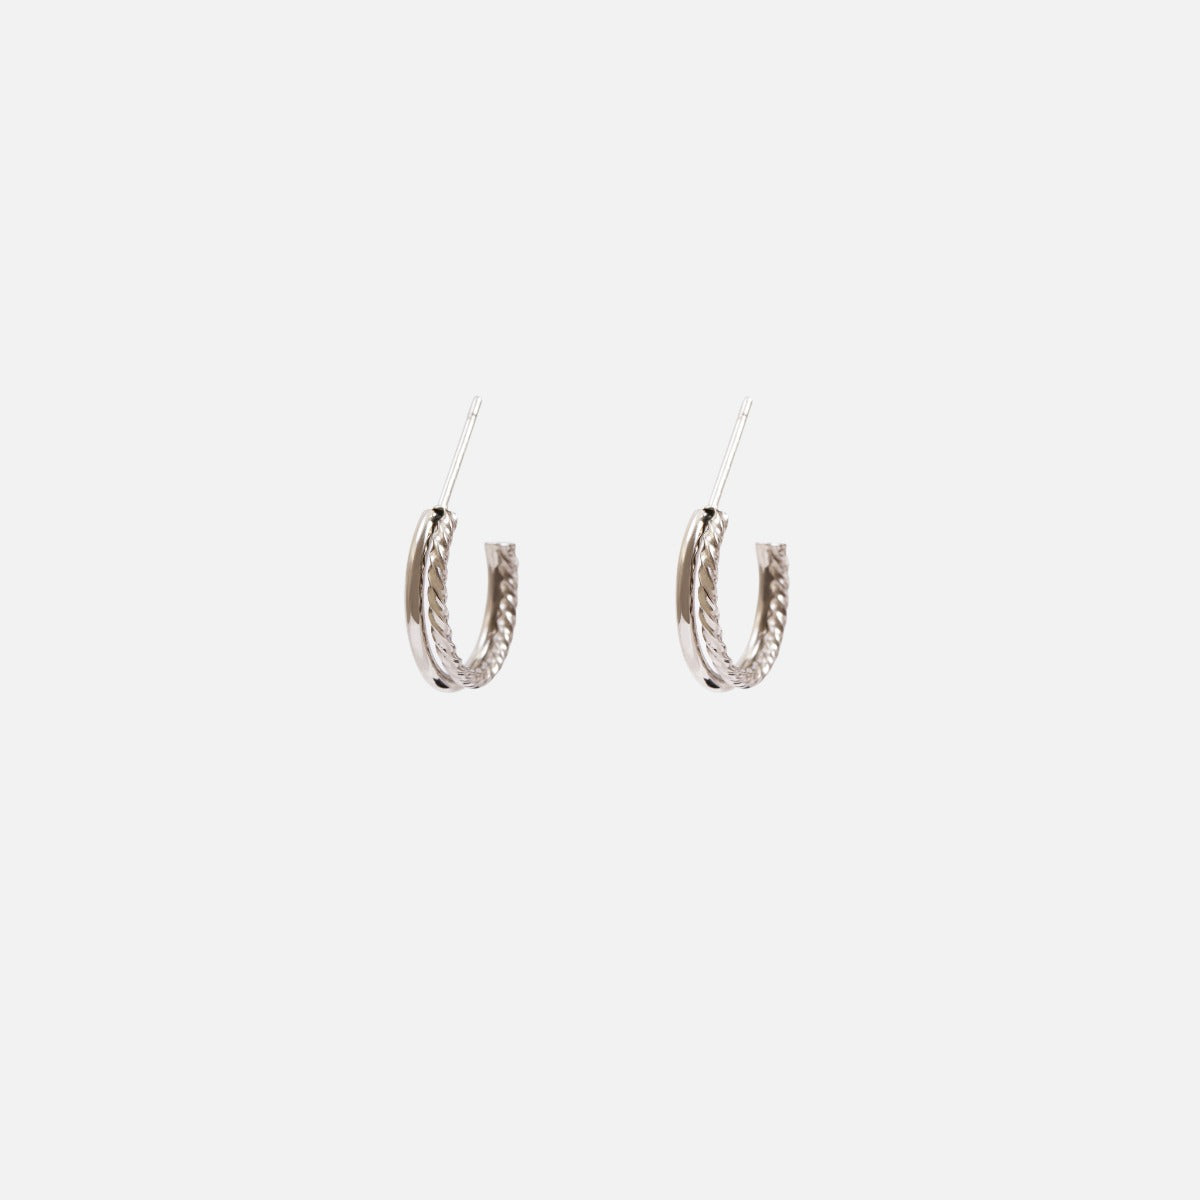 Double silvered stainless steel hoops earrings